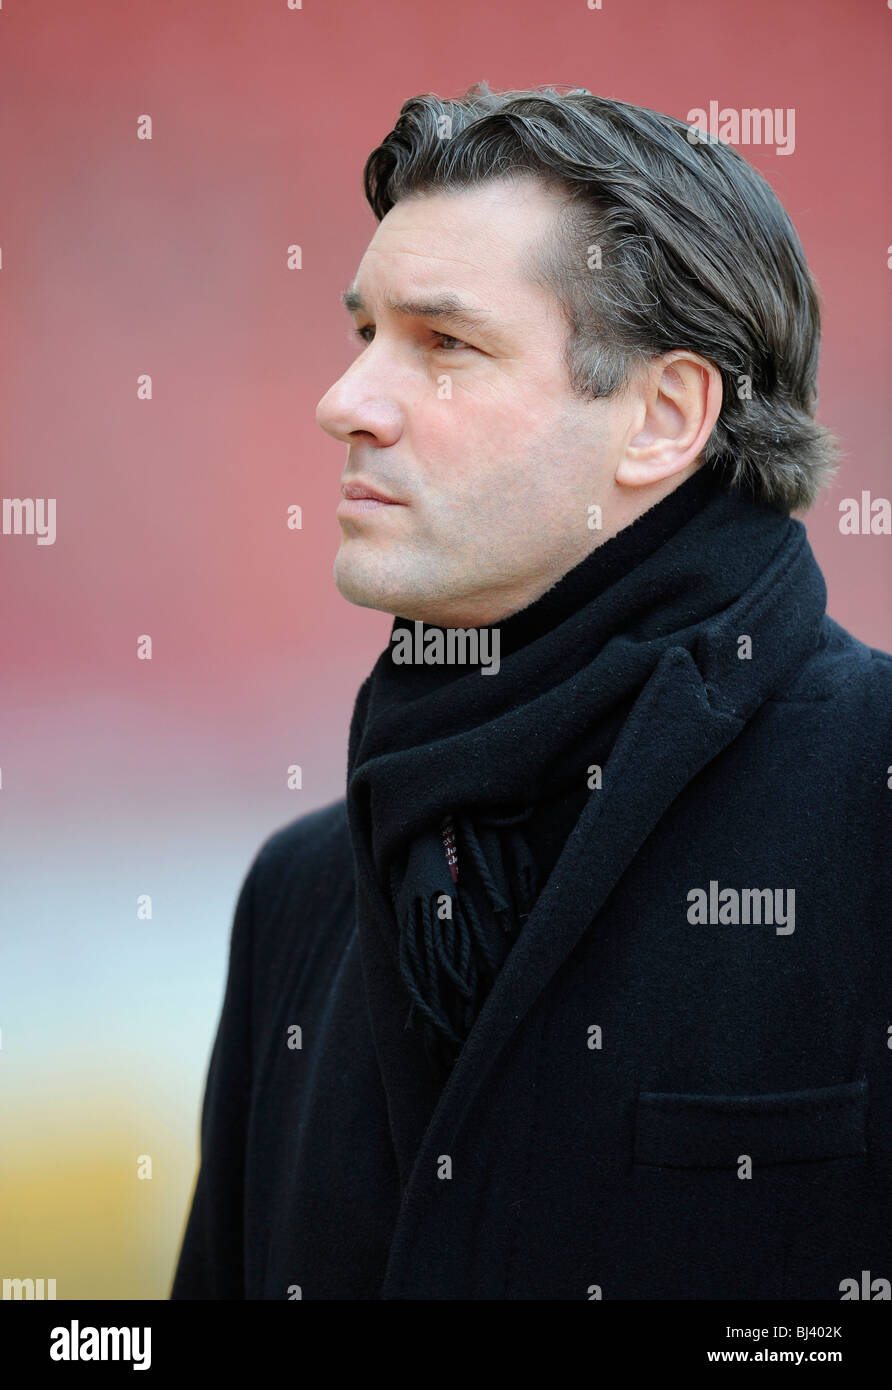 Sportdirektor Michael Zorc, Fußballverein Borussia Dortmund Stockfoto